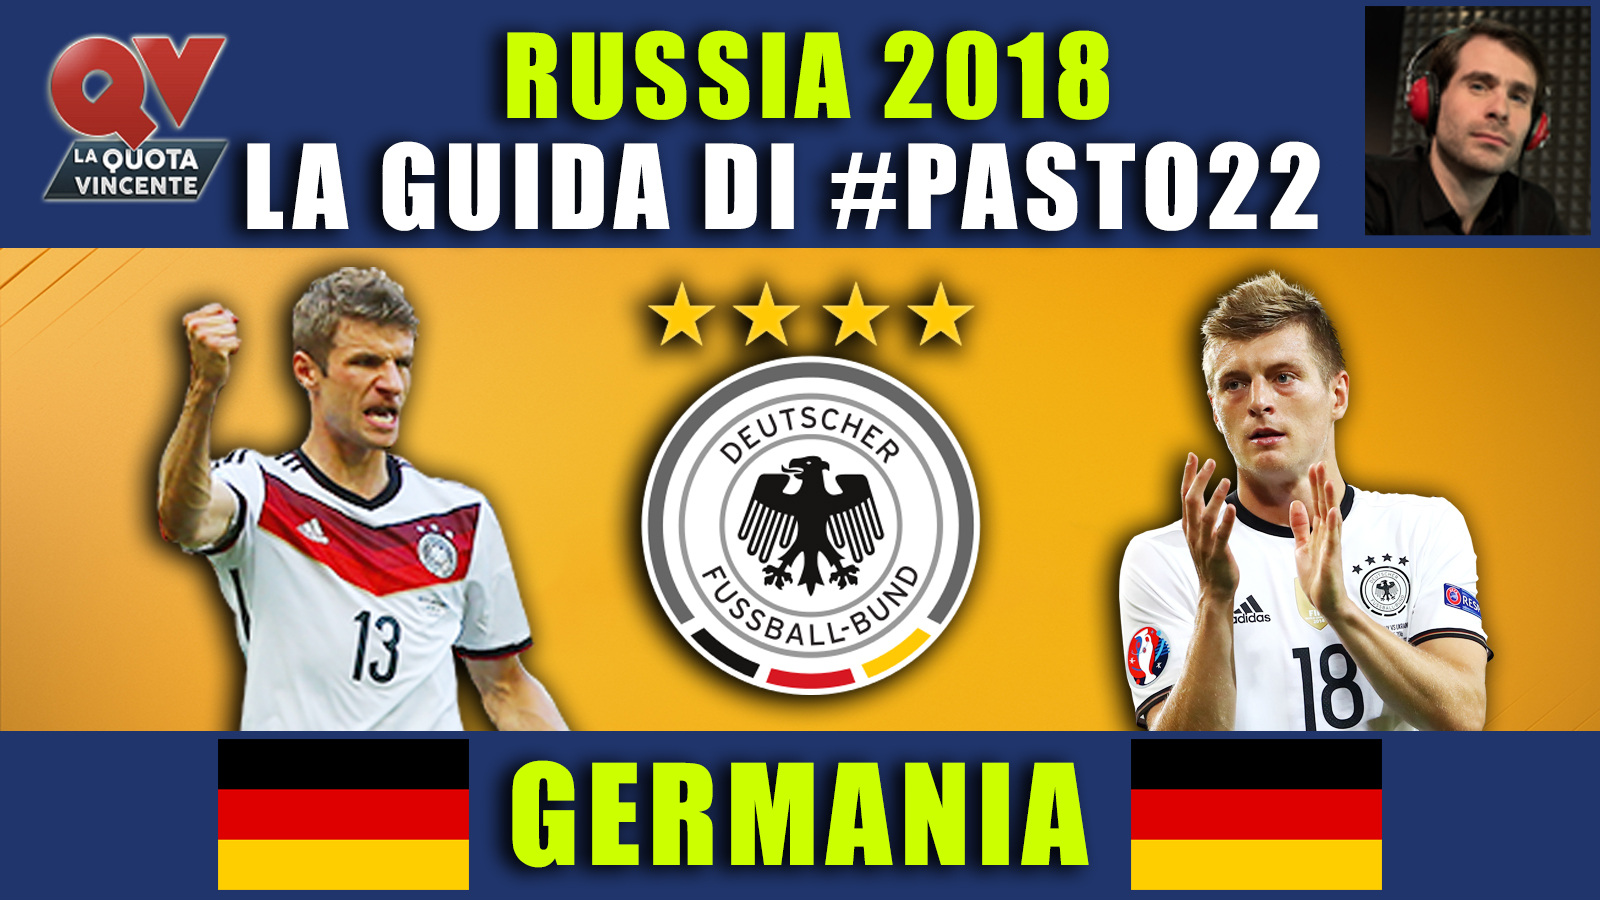 https://www.laquotavincente.it/guida-mondiali-russia-2018-germania/